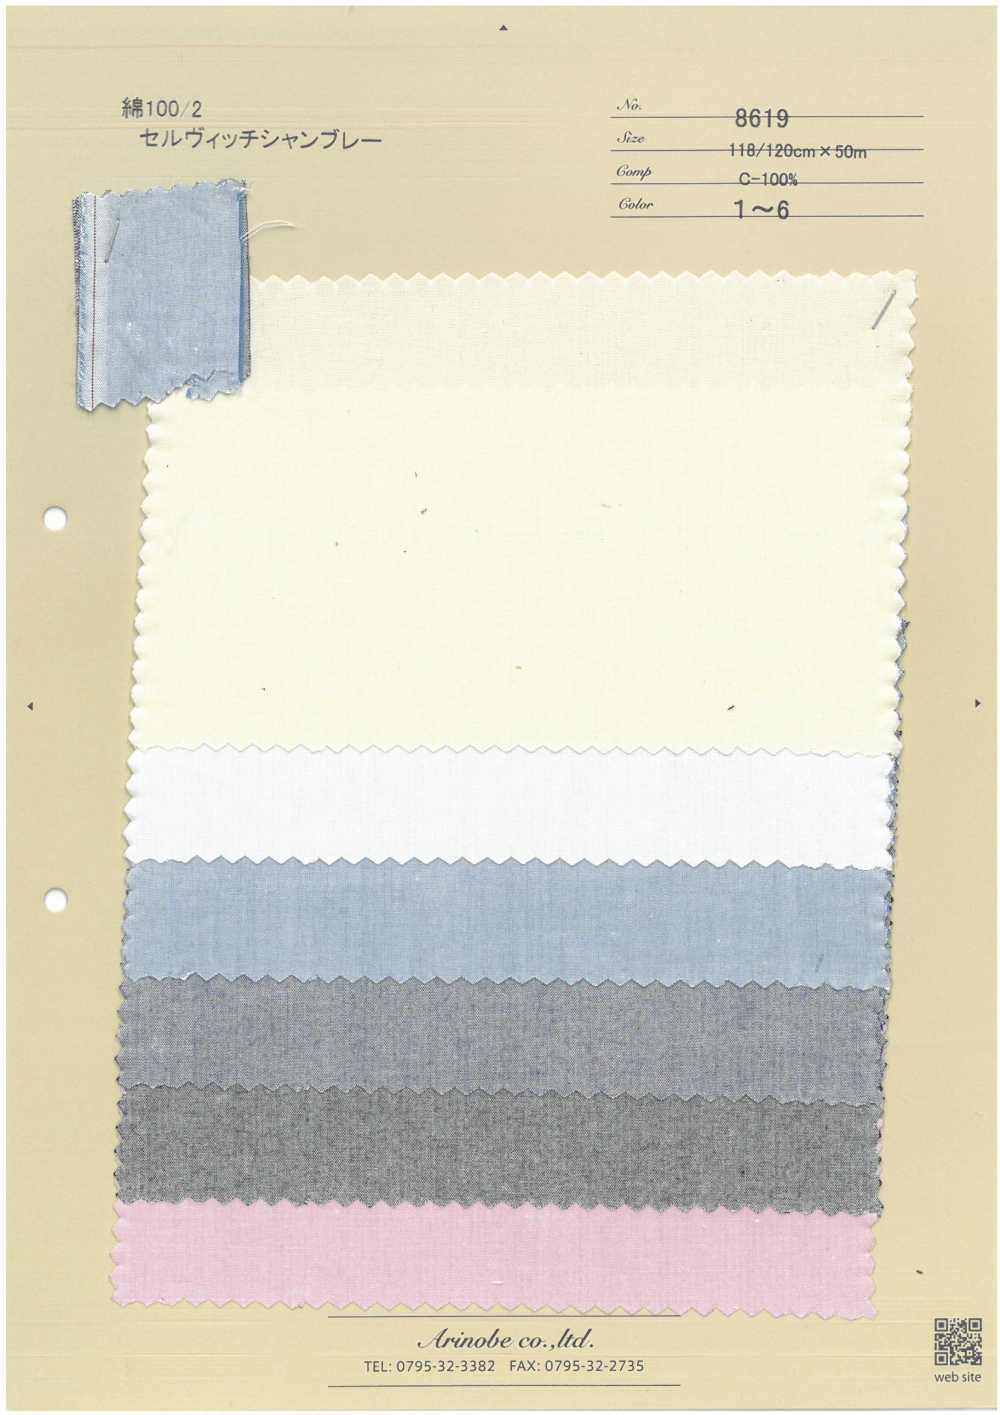 8619 Vải Chambray Viền Vải Cotton 100/2 ARINOBE CO., LTD.